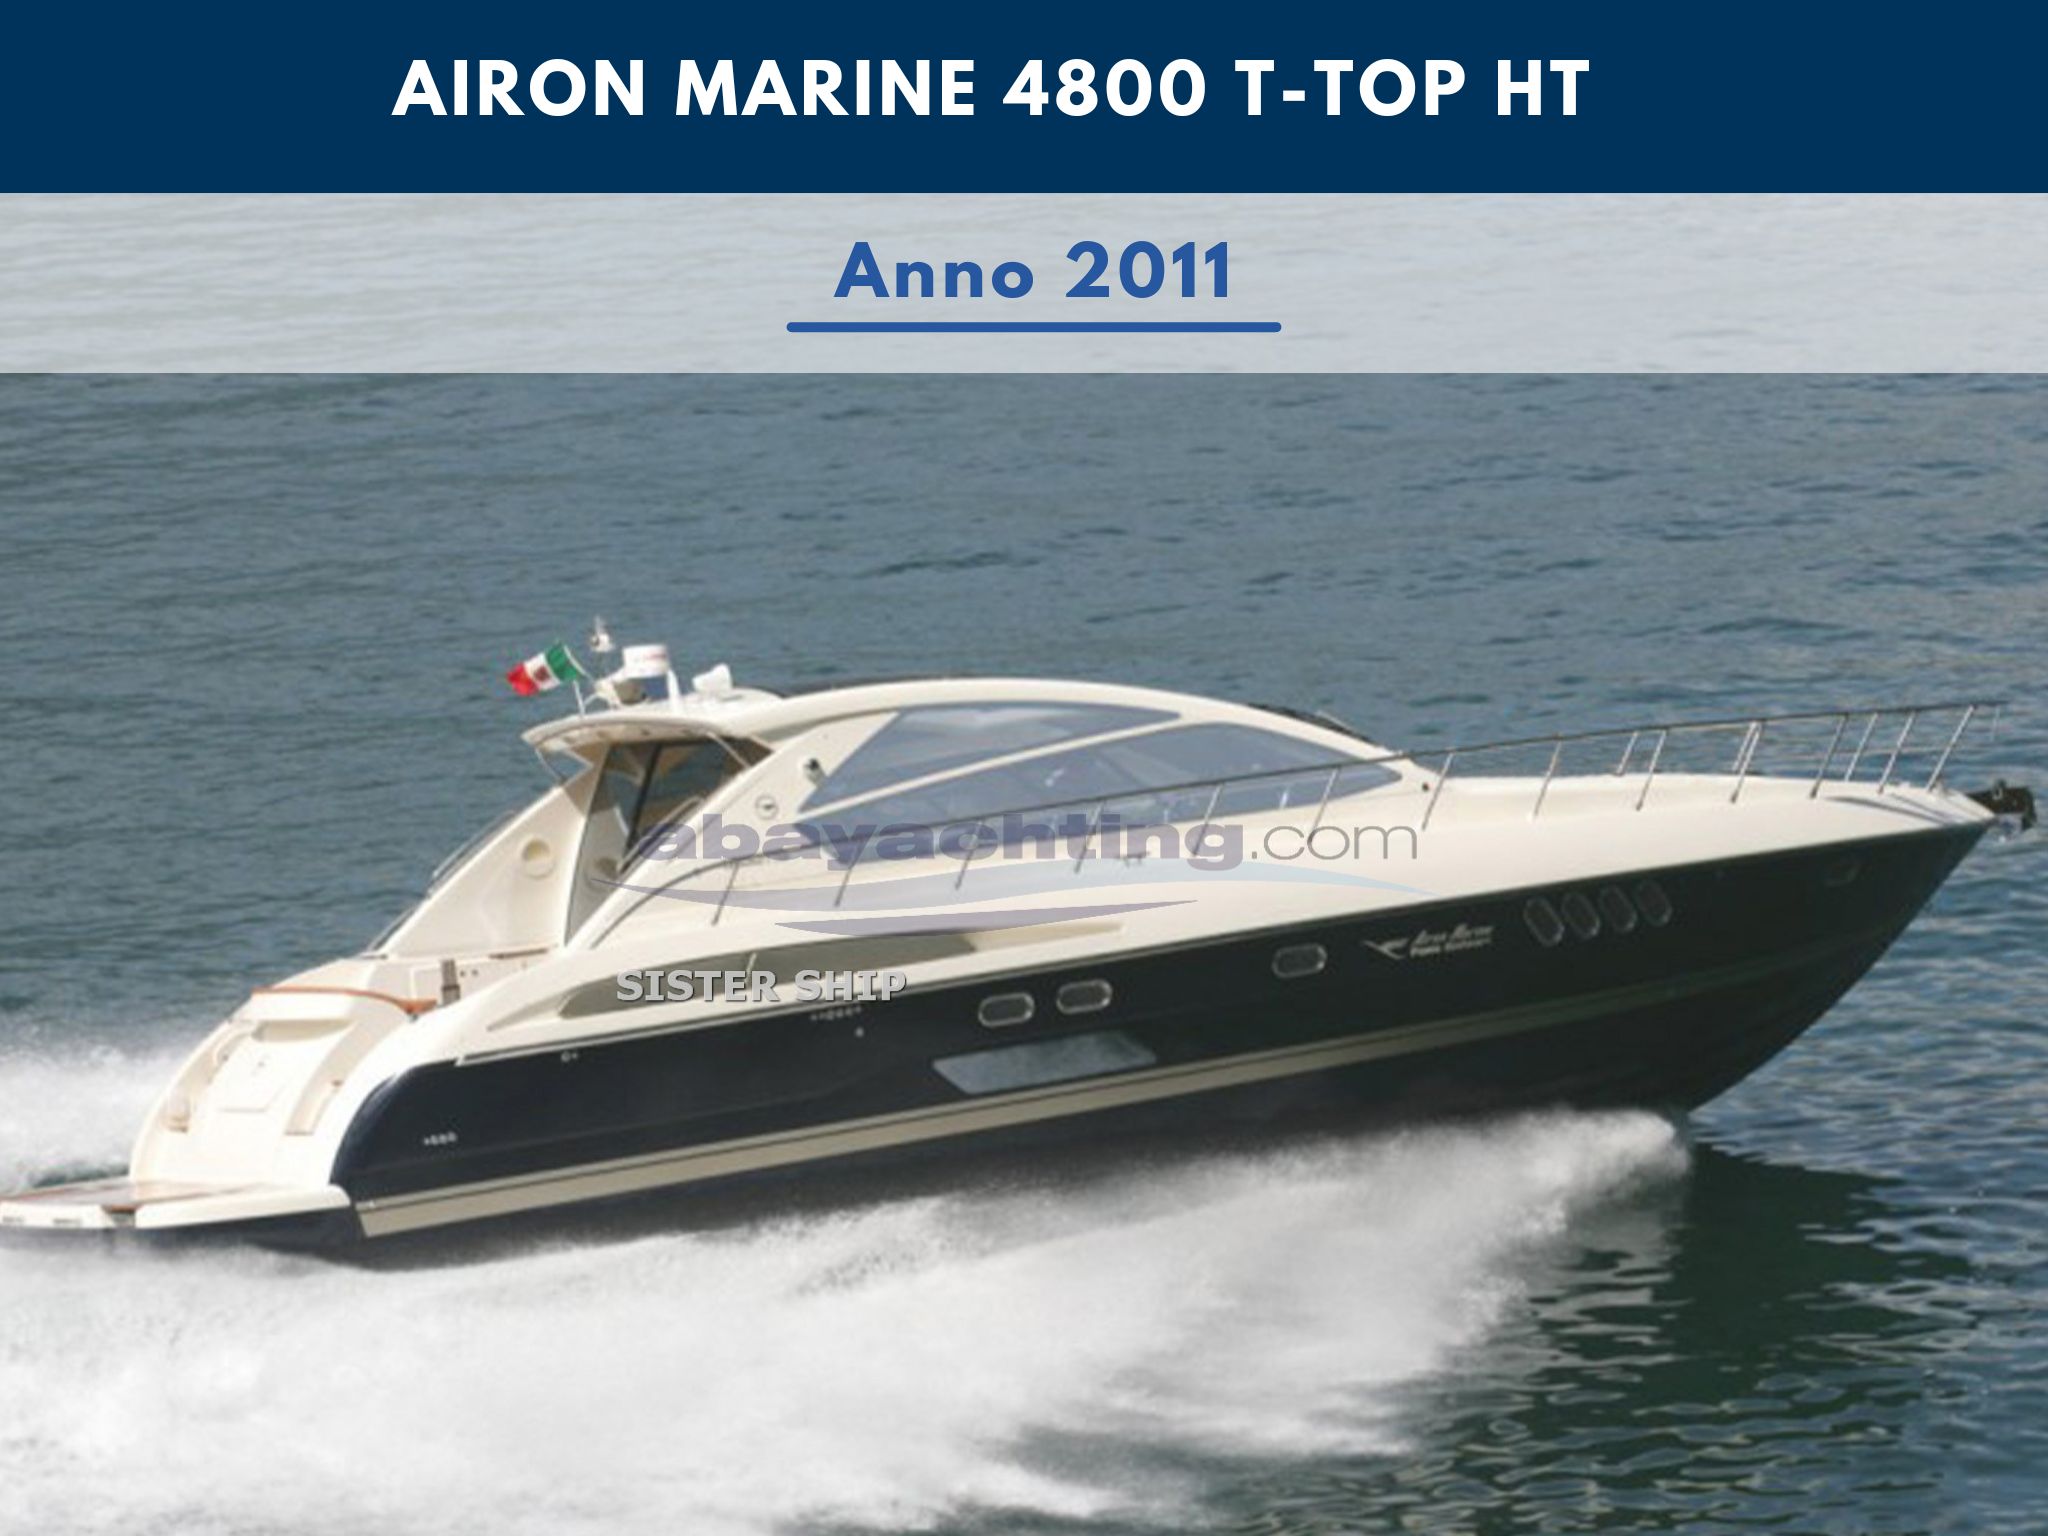 Nuovo Arrivo Airon Marine 4800 T-Top Ht